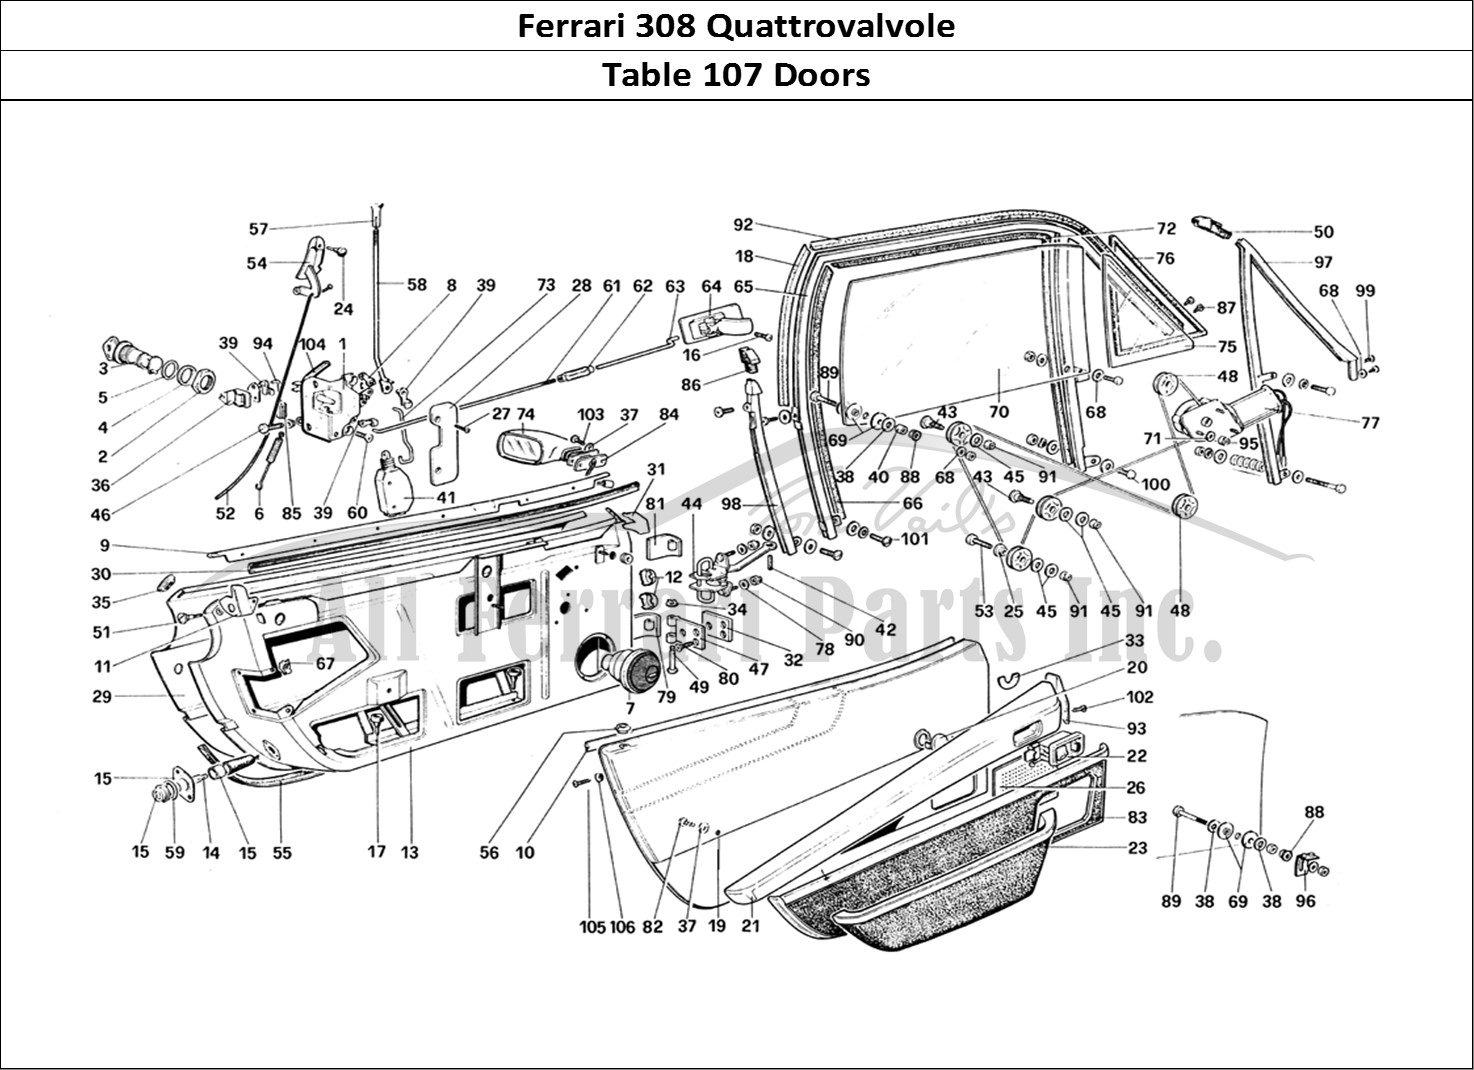 Ferrari Parts Ferrari 308 Quattrovalvole (1985) Page 107 Doors